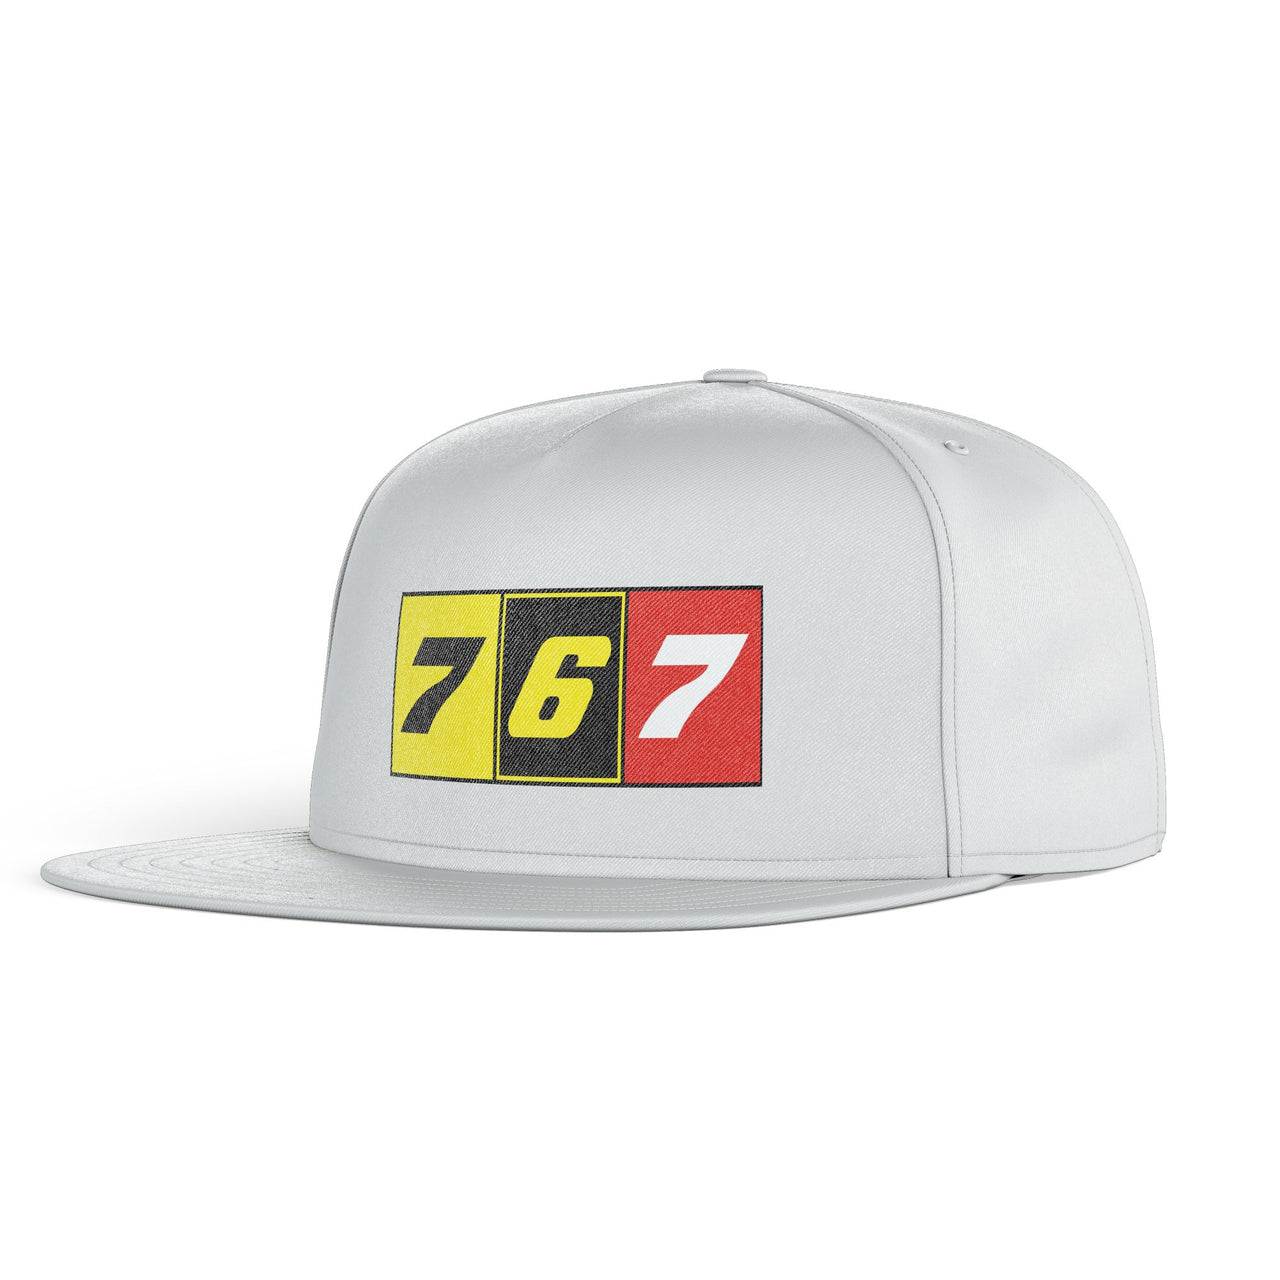 Flat Colourful 767 Designed Snapback Caps & Hats